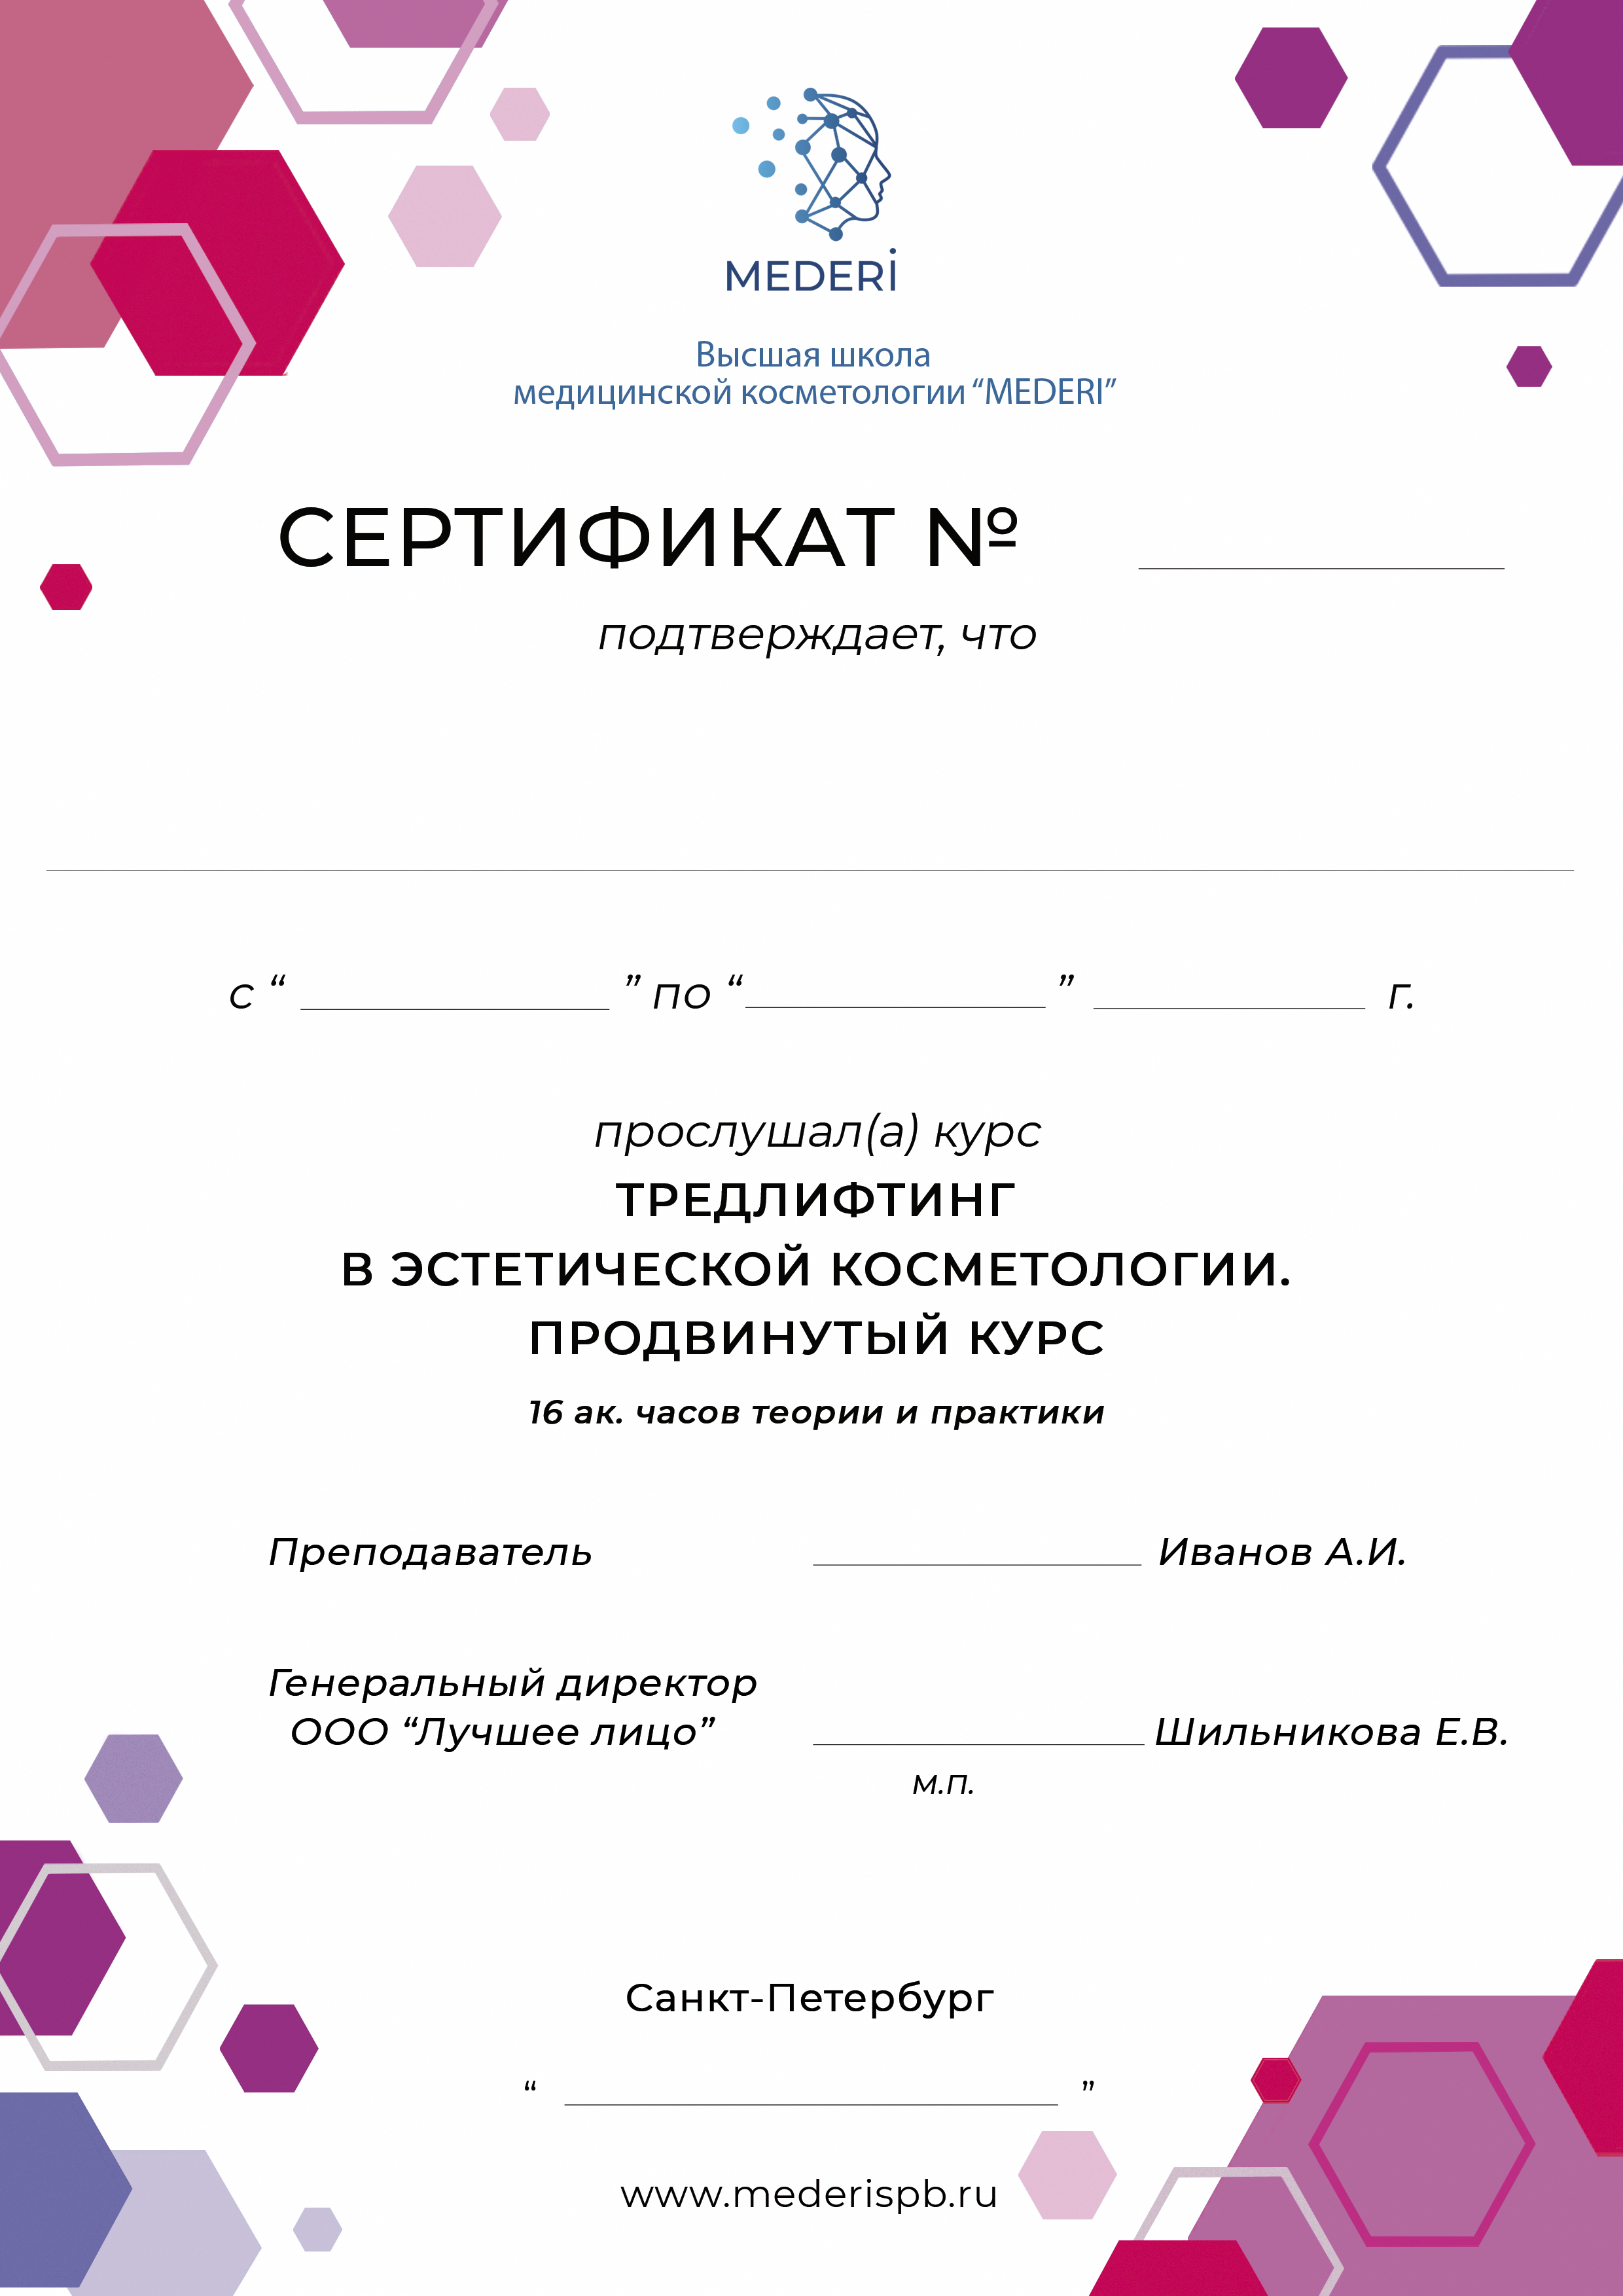 Сертификат по тредлифтингу